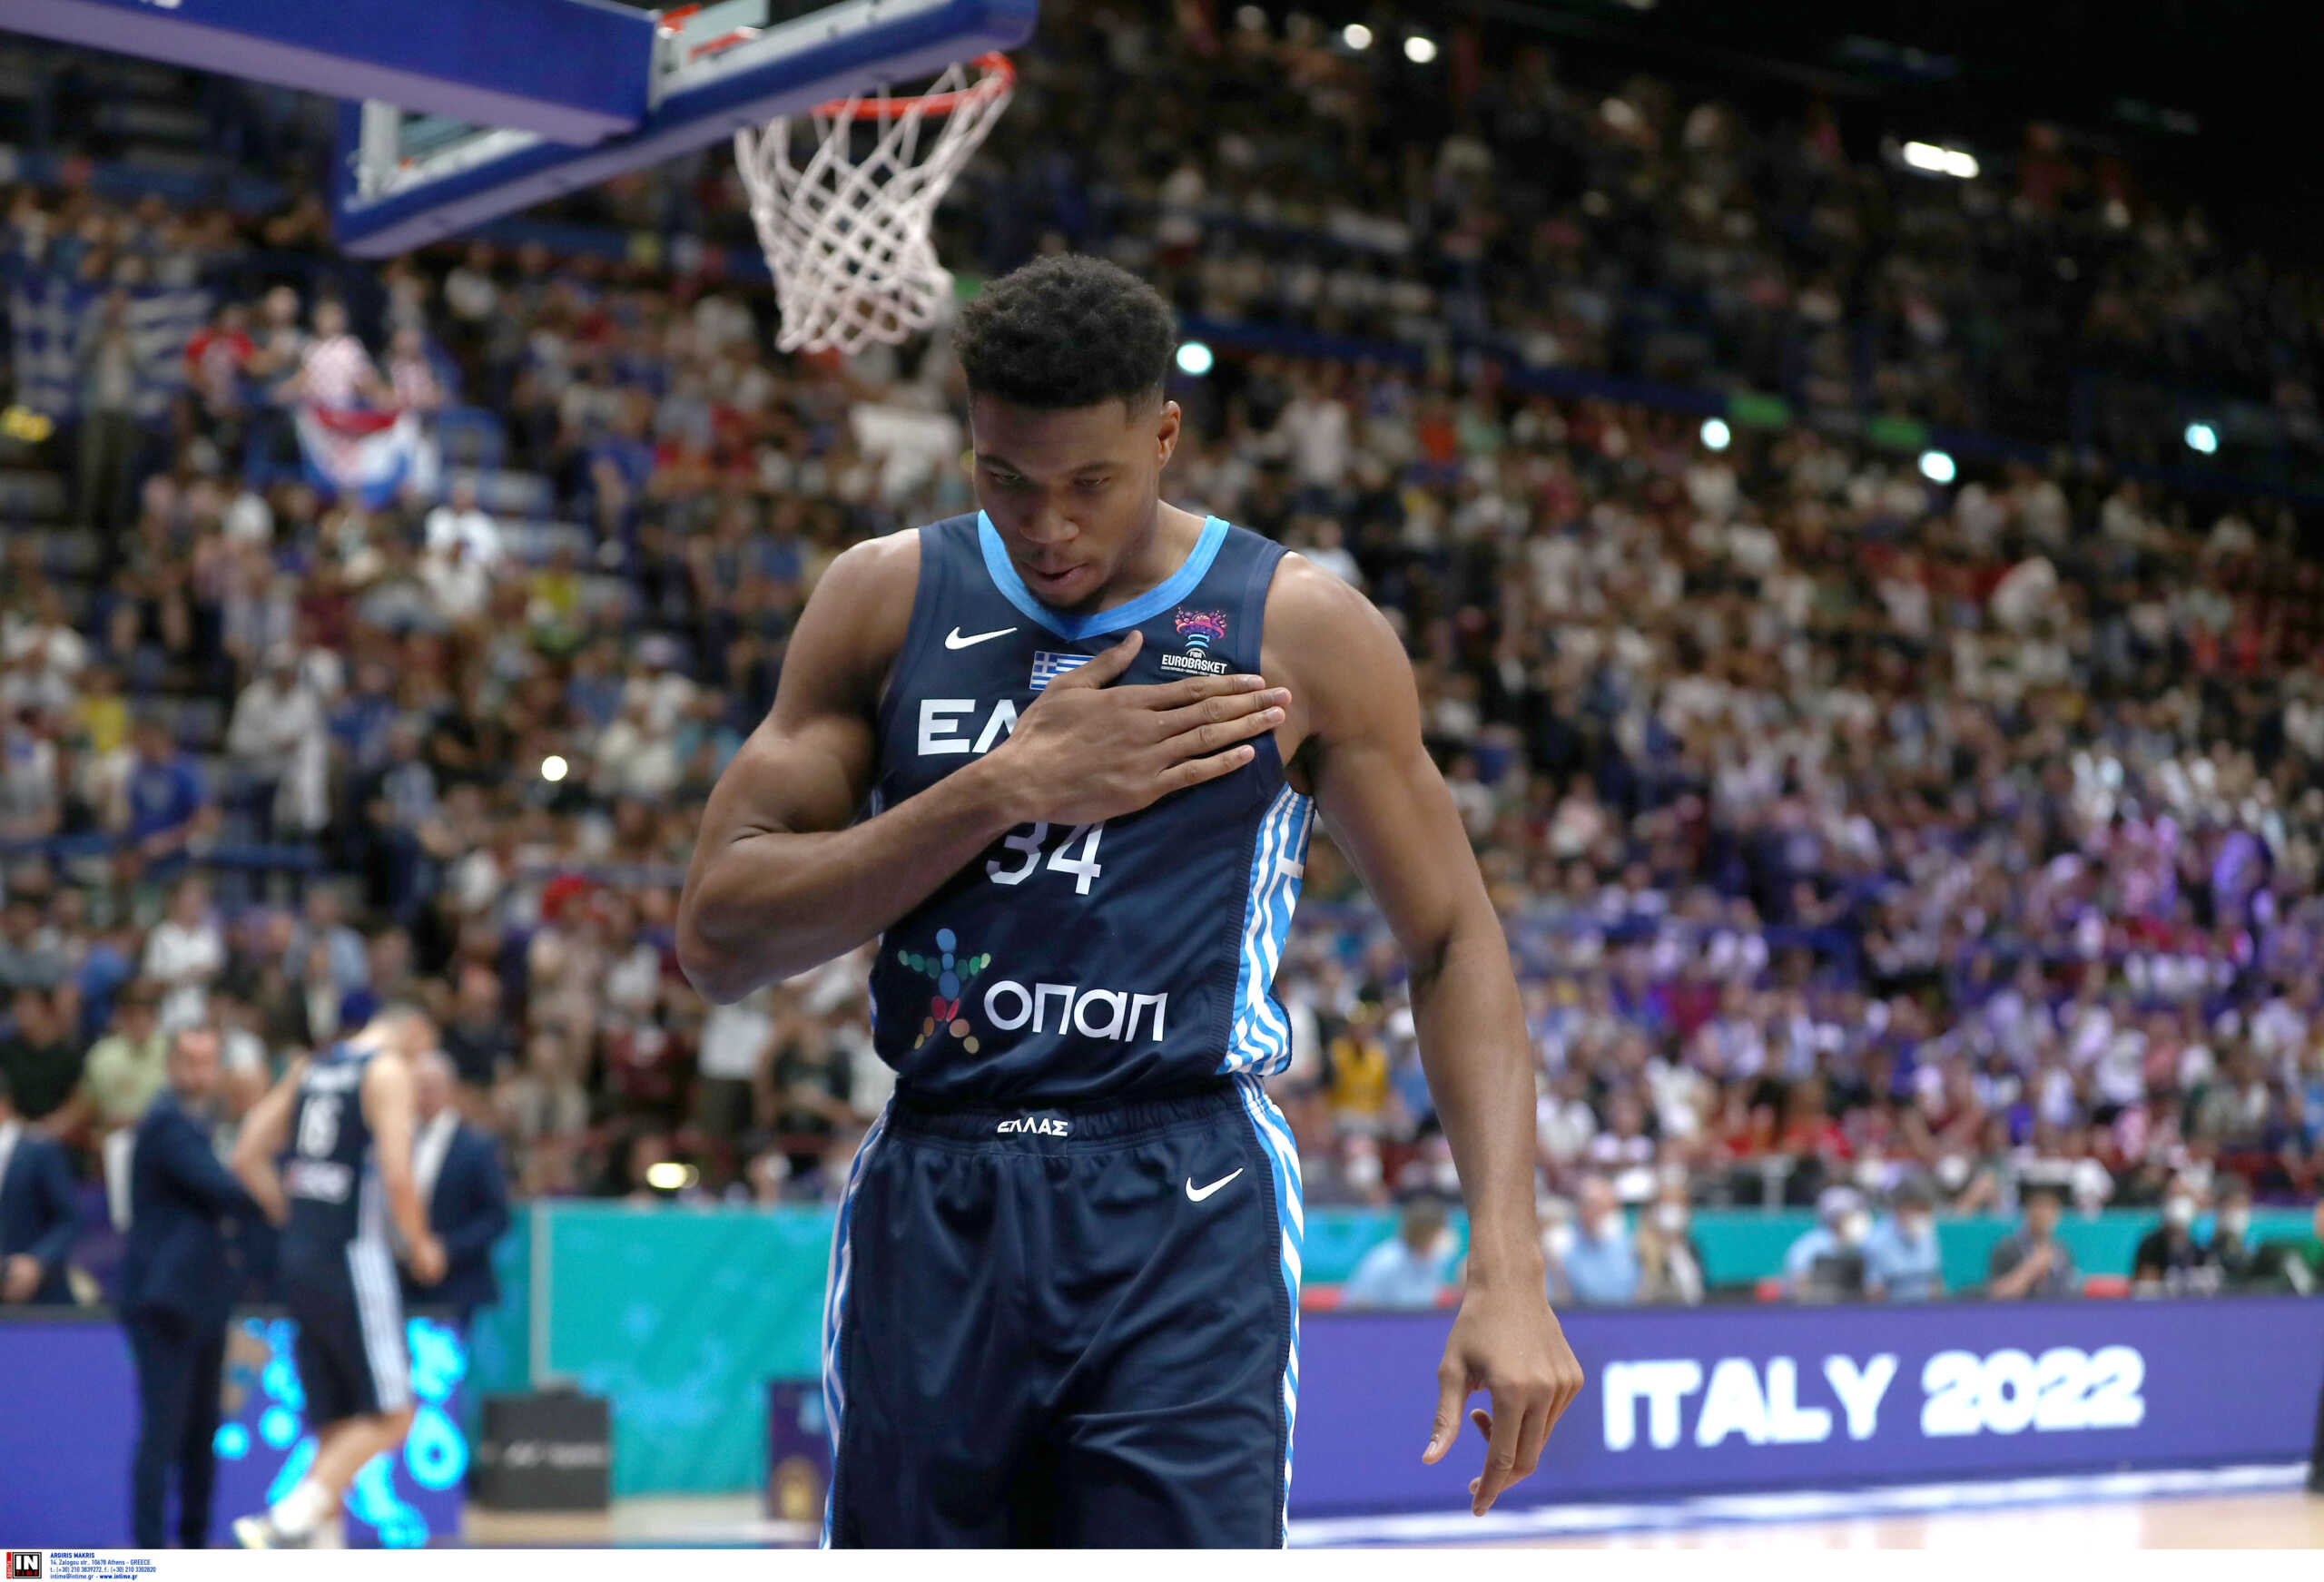 Eurobasket 2022, Ελλάδα – Ιταλία: Απίστευτες εκδηλώσεις λατρείας από τους Ιταλούς προς το πρόσωπο του Γιάννη Αντετοκούνμπο μετά το τέλος του αγώνα